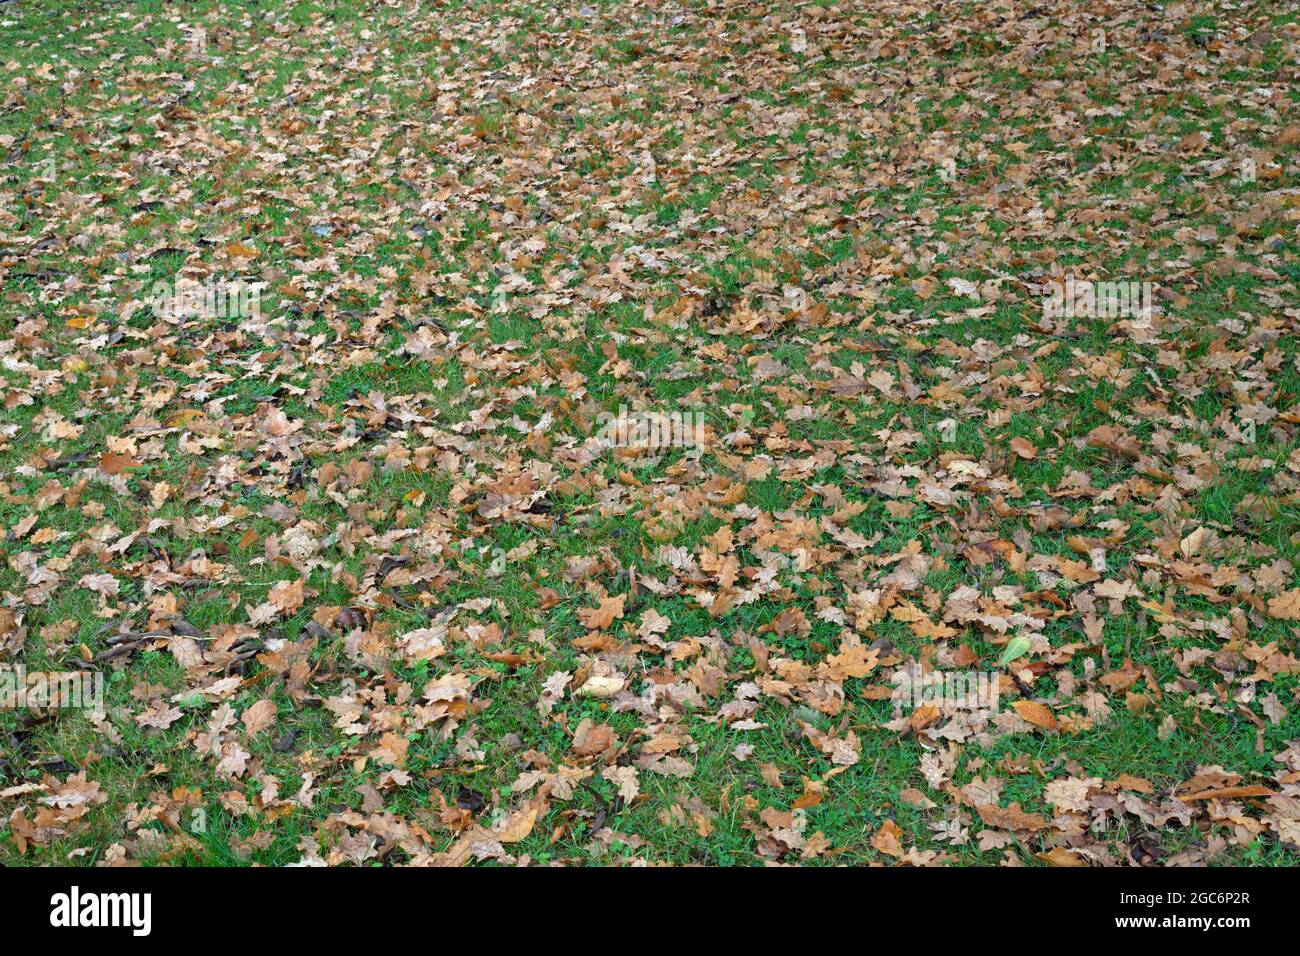 Fallen leaves carpet a forest floor Stock Photo